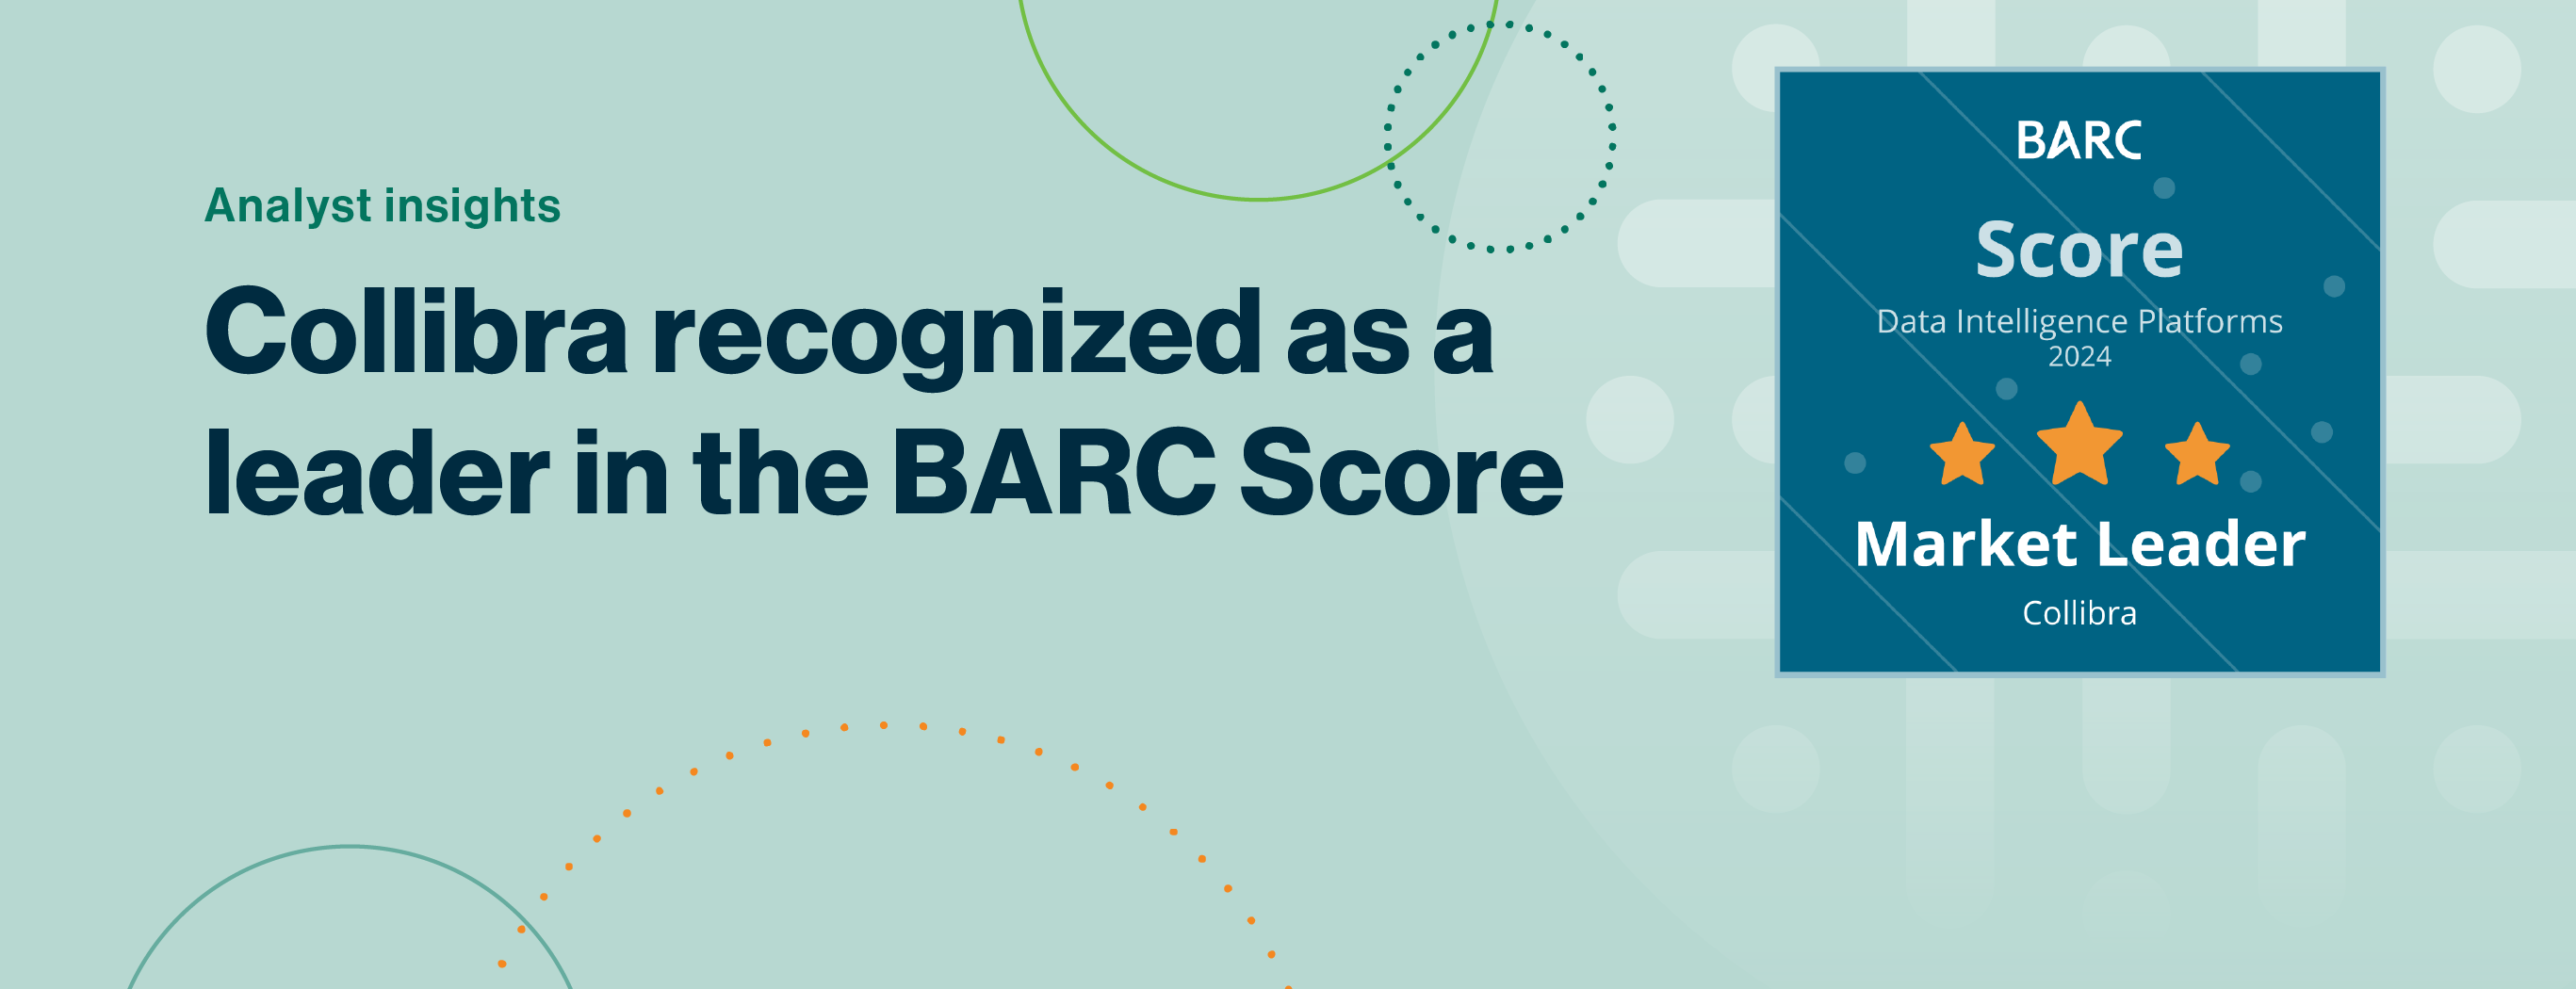 BARC Score: Data Intelligence Platform